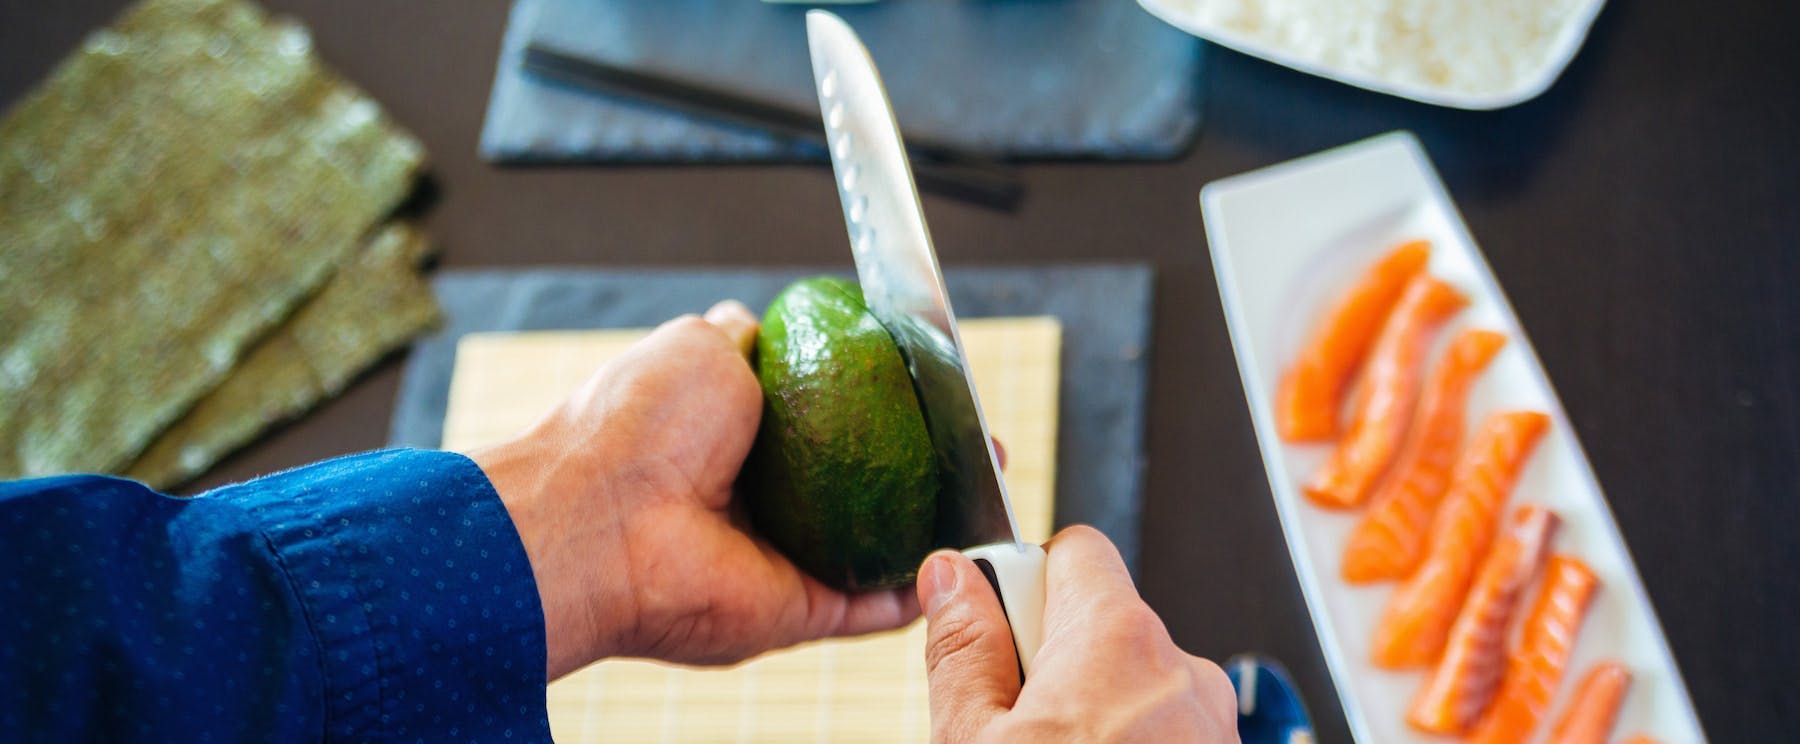 A person cutting an avocado